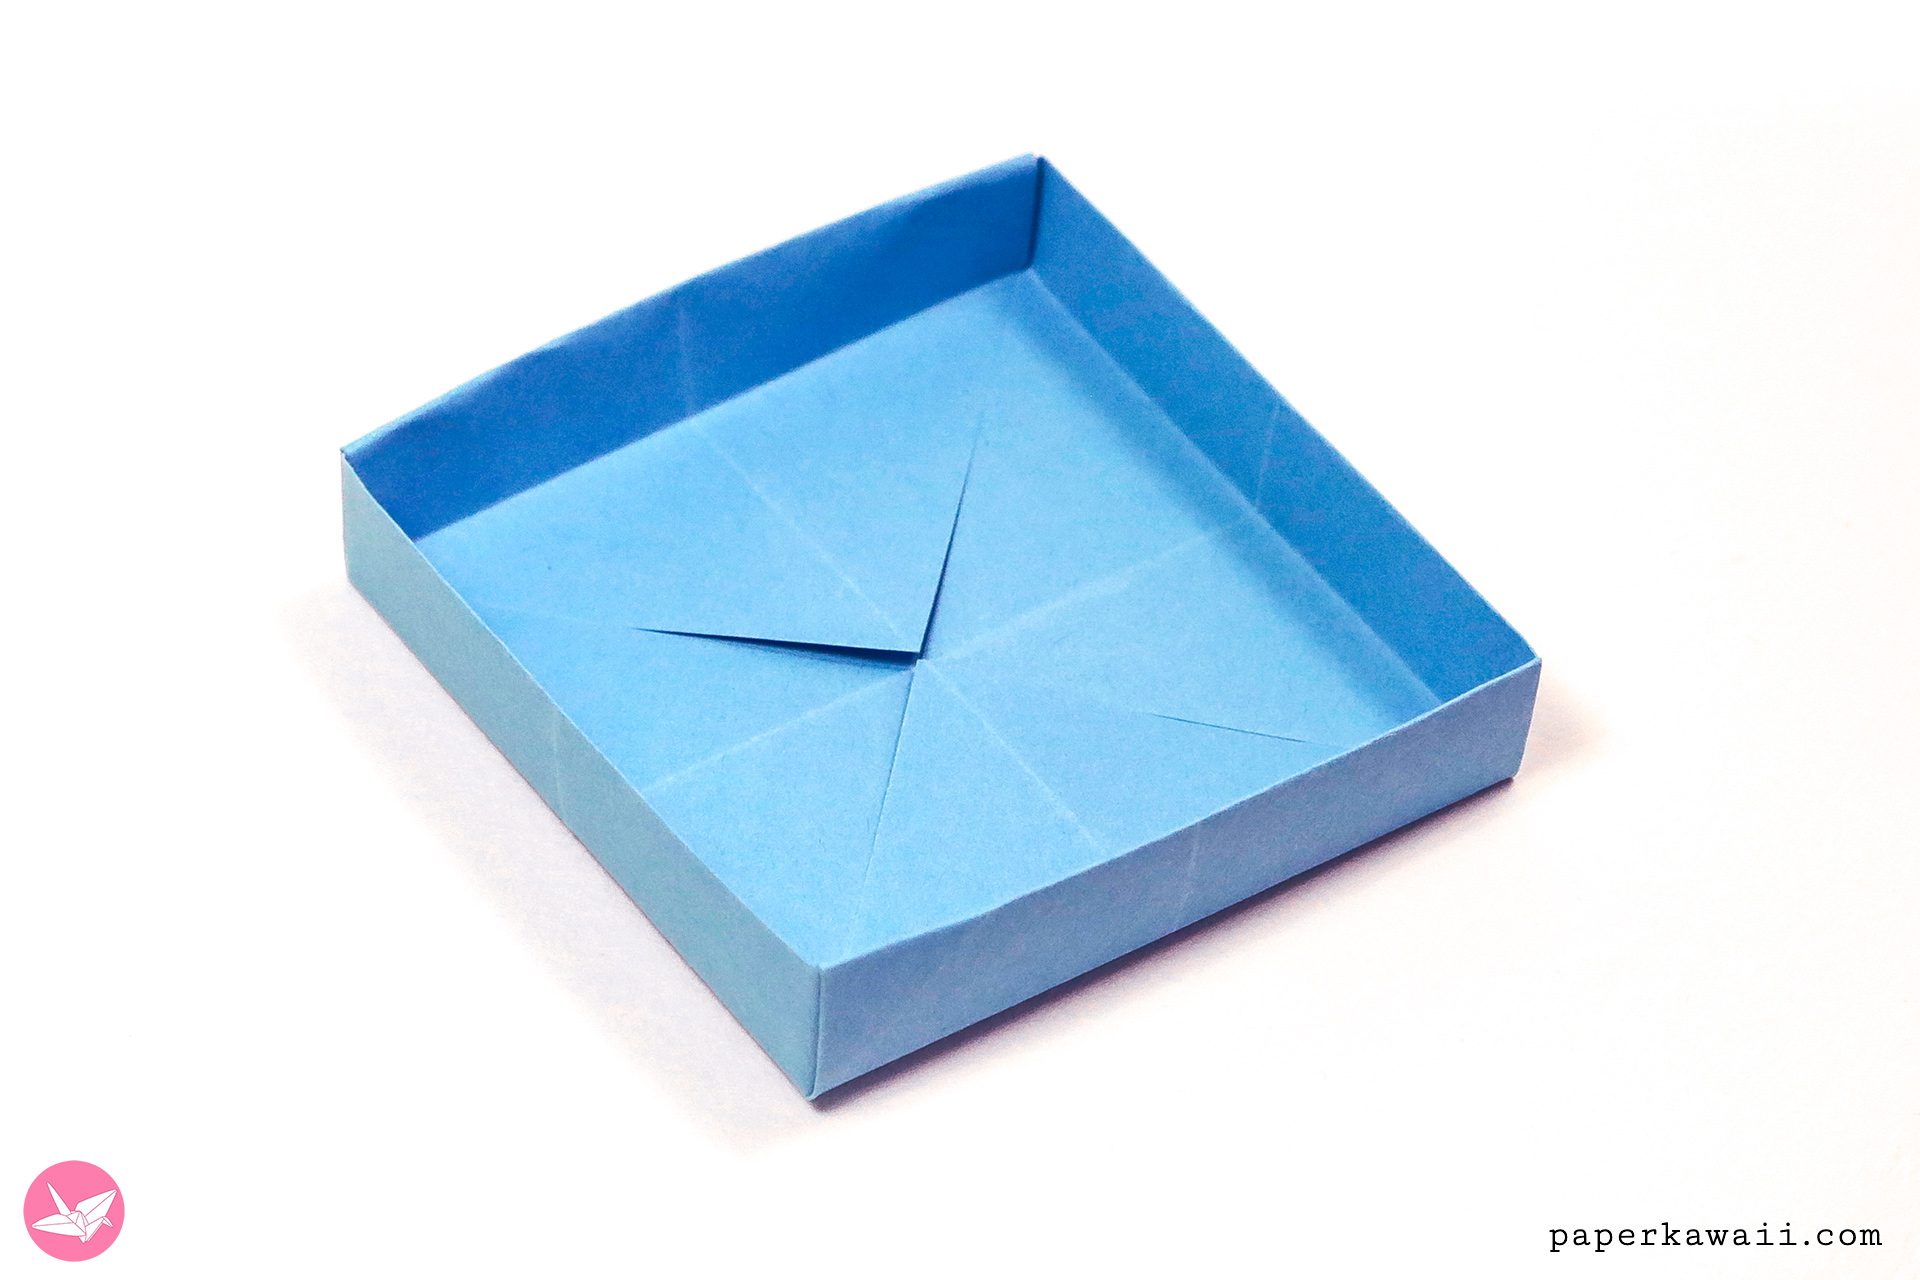 Square & Shallow Origami Masu Box Tutorial - Paper Kawaii